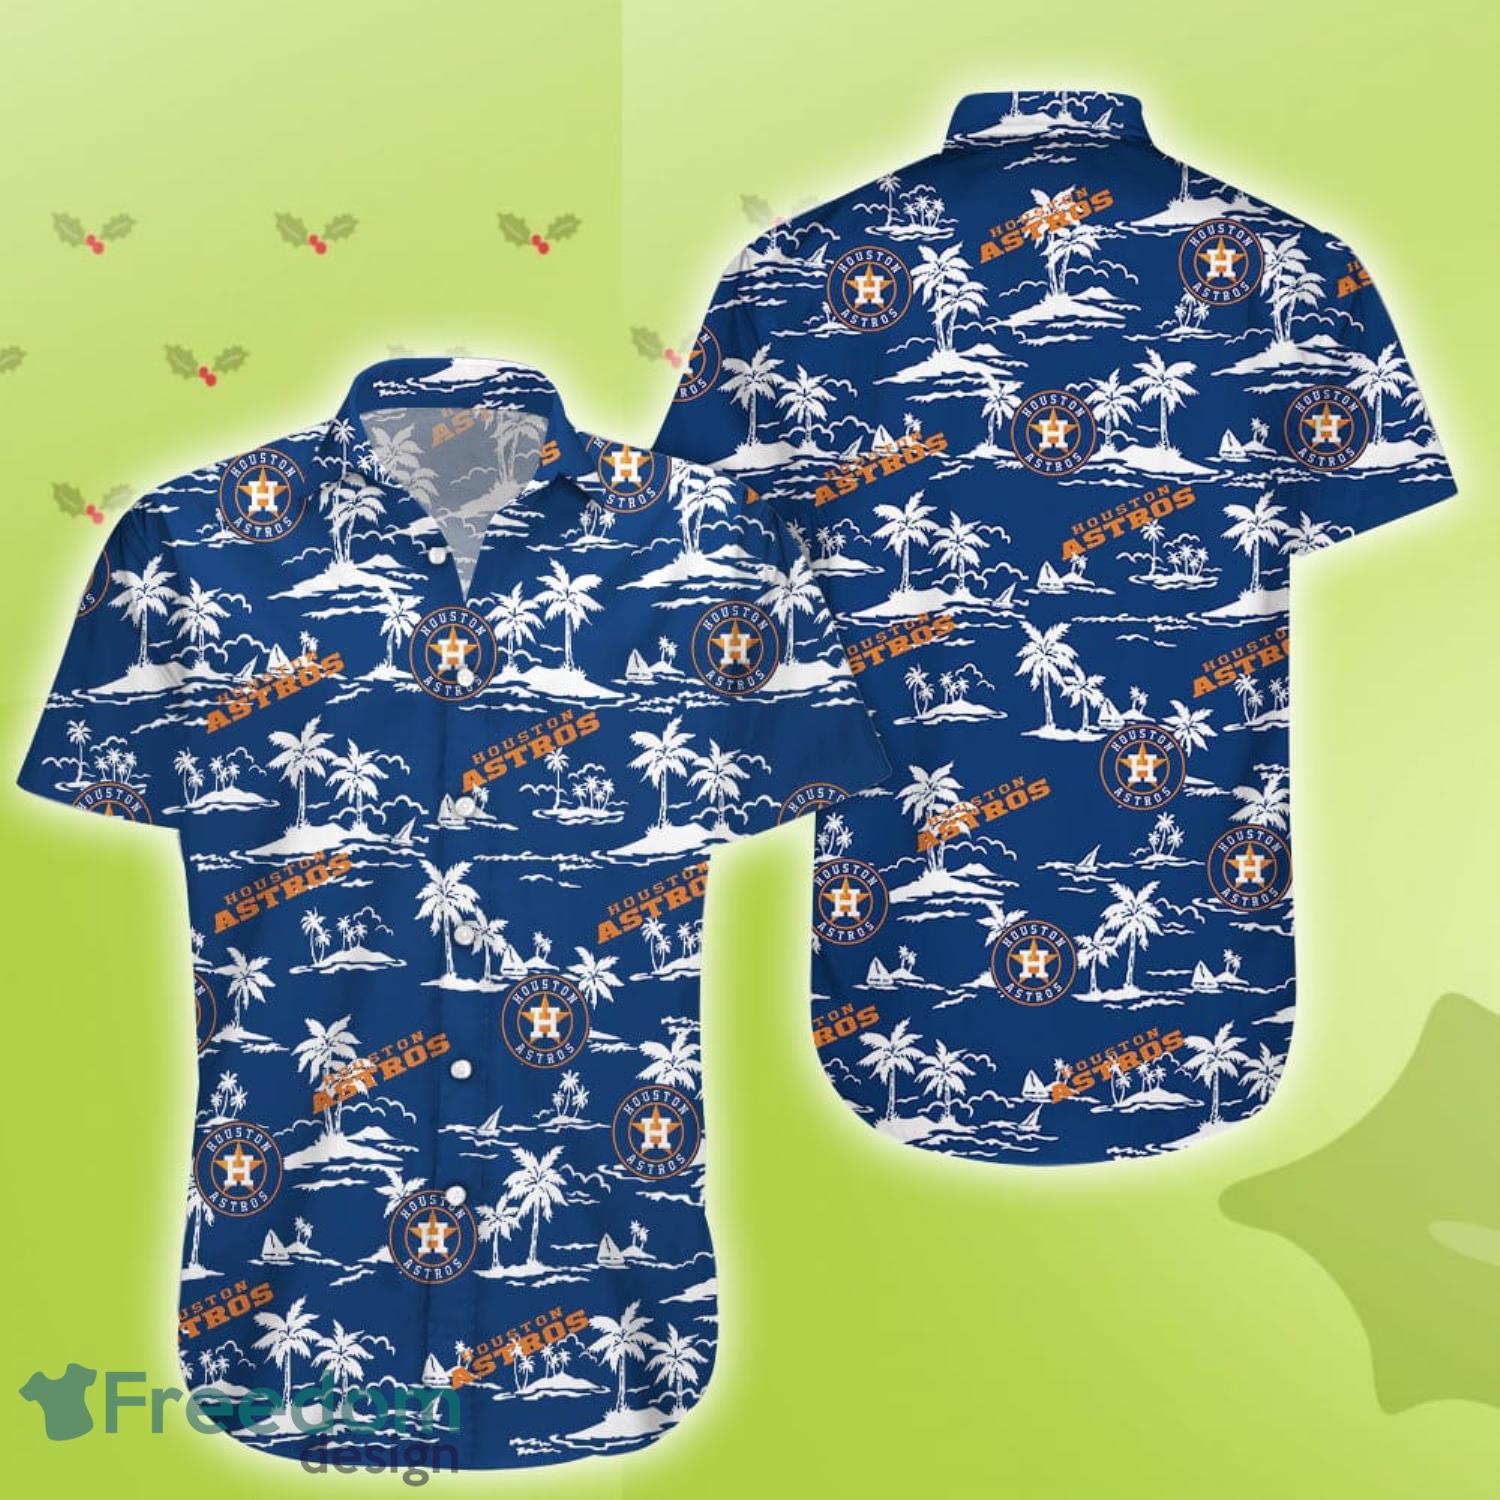 Houston Astros MLB Summer 3D Hawaiian Shirt Gift For Men And Women Fans -  Freedomdesign